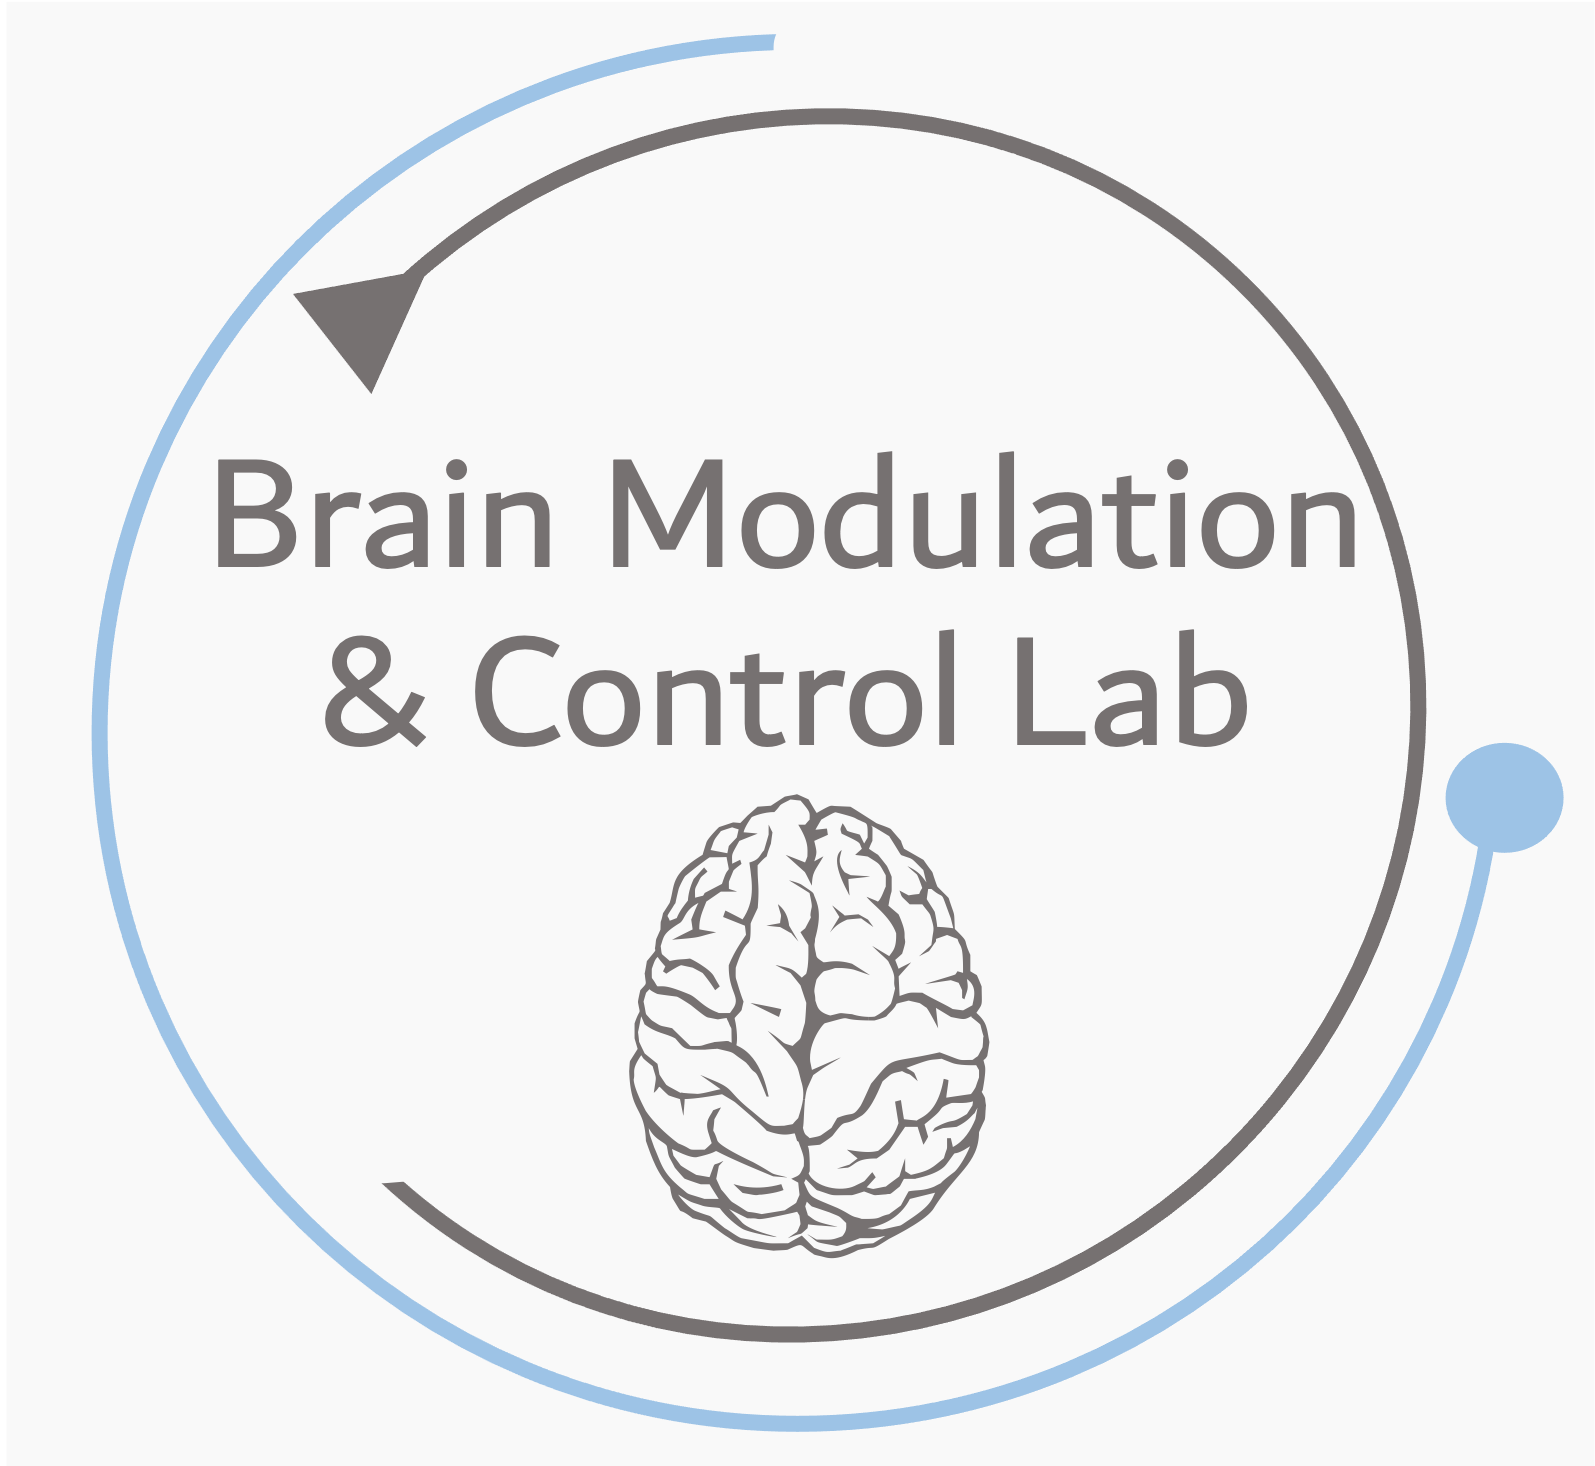 Brain Modulation & Control Lab